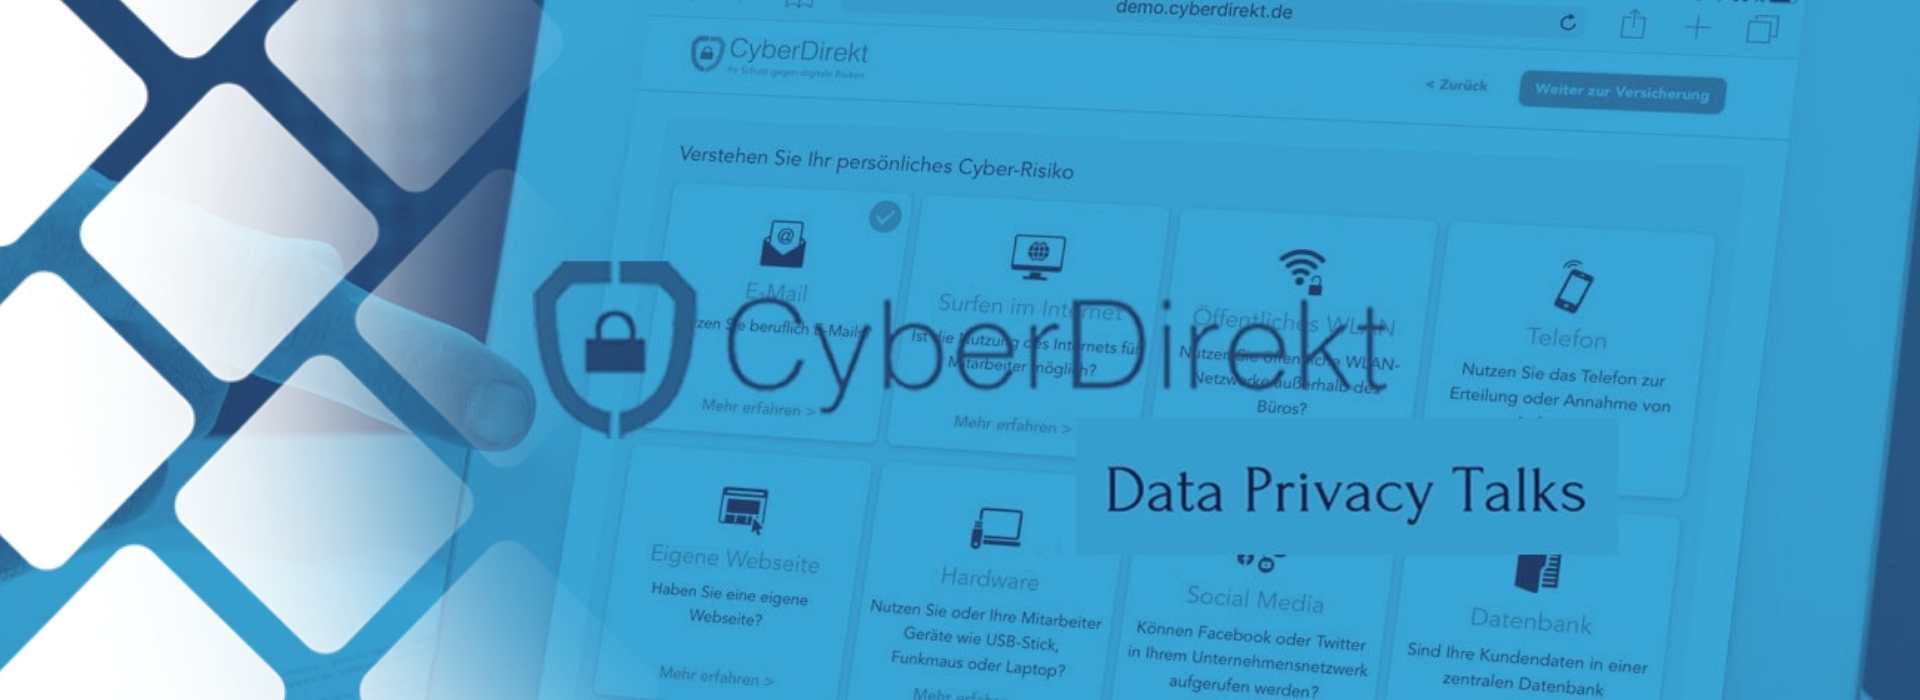 CyberDirekt Data Privacy Talk